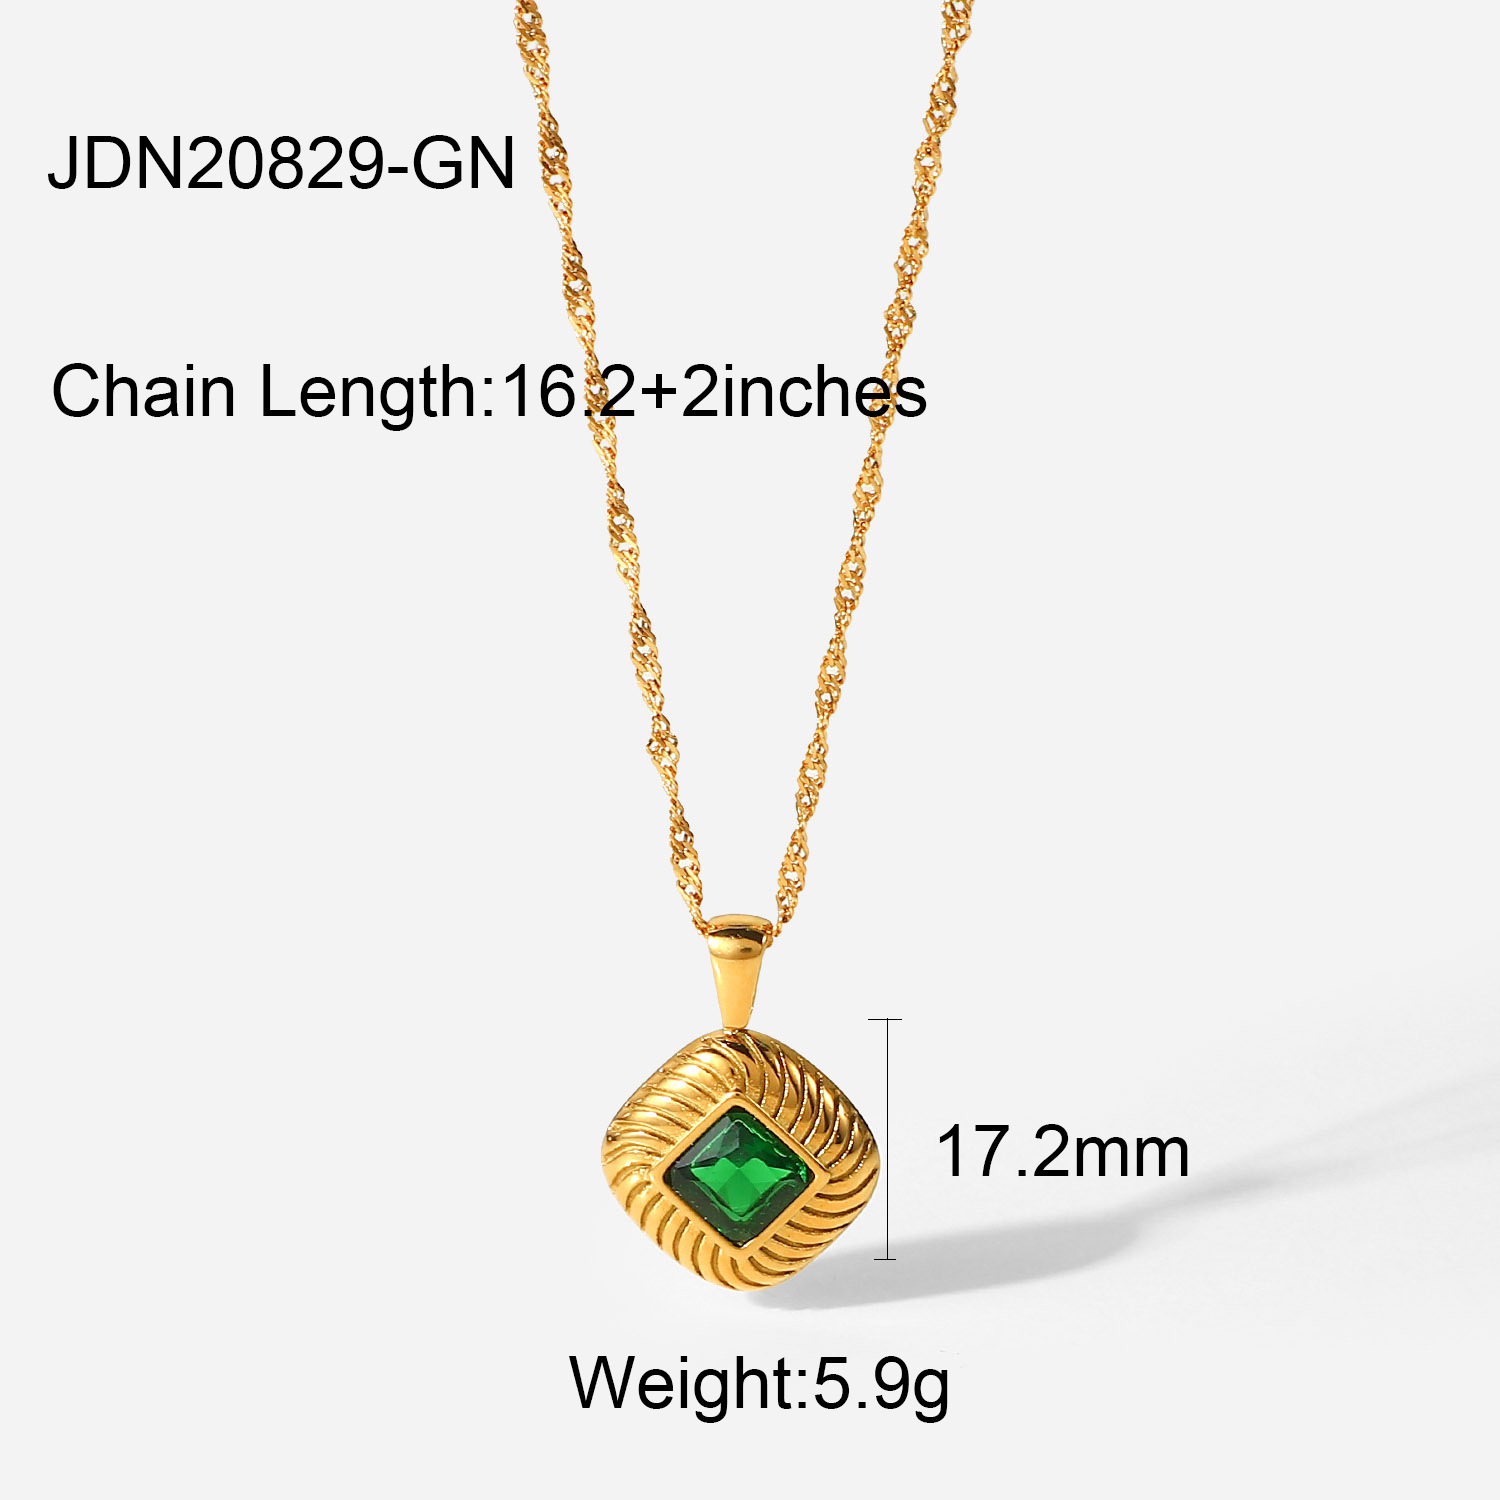 JDN20829-GN